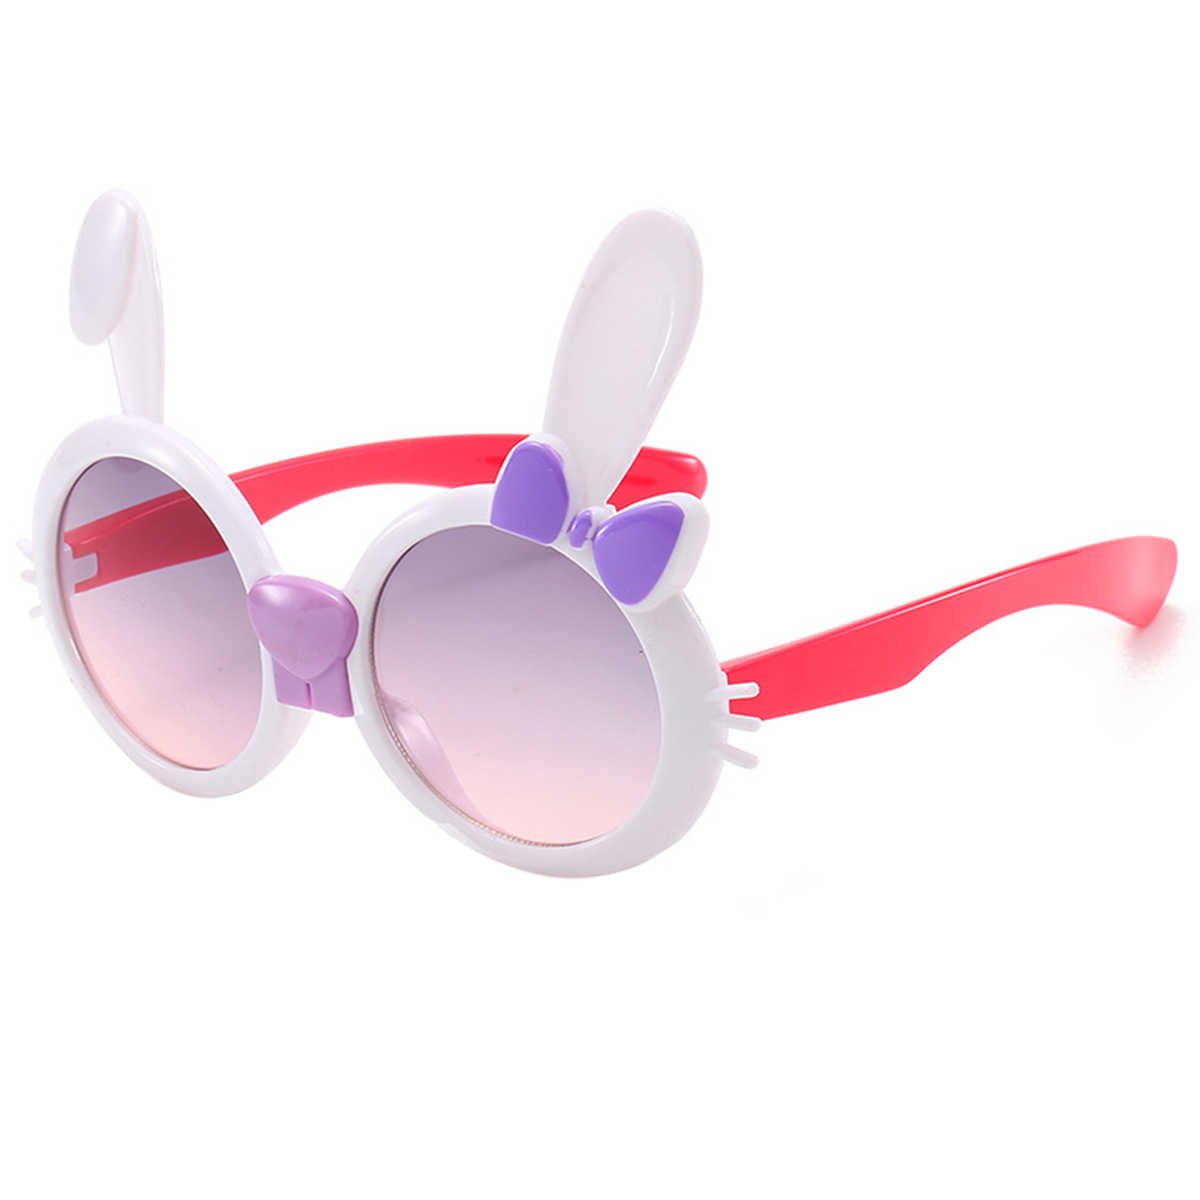 Children Sunglasses Girls Boys Cute Anti-UV Rabbit Ear Sunglasses Outdoor Beach Protective Sunglasses - image 2 of 6